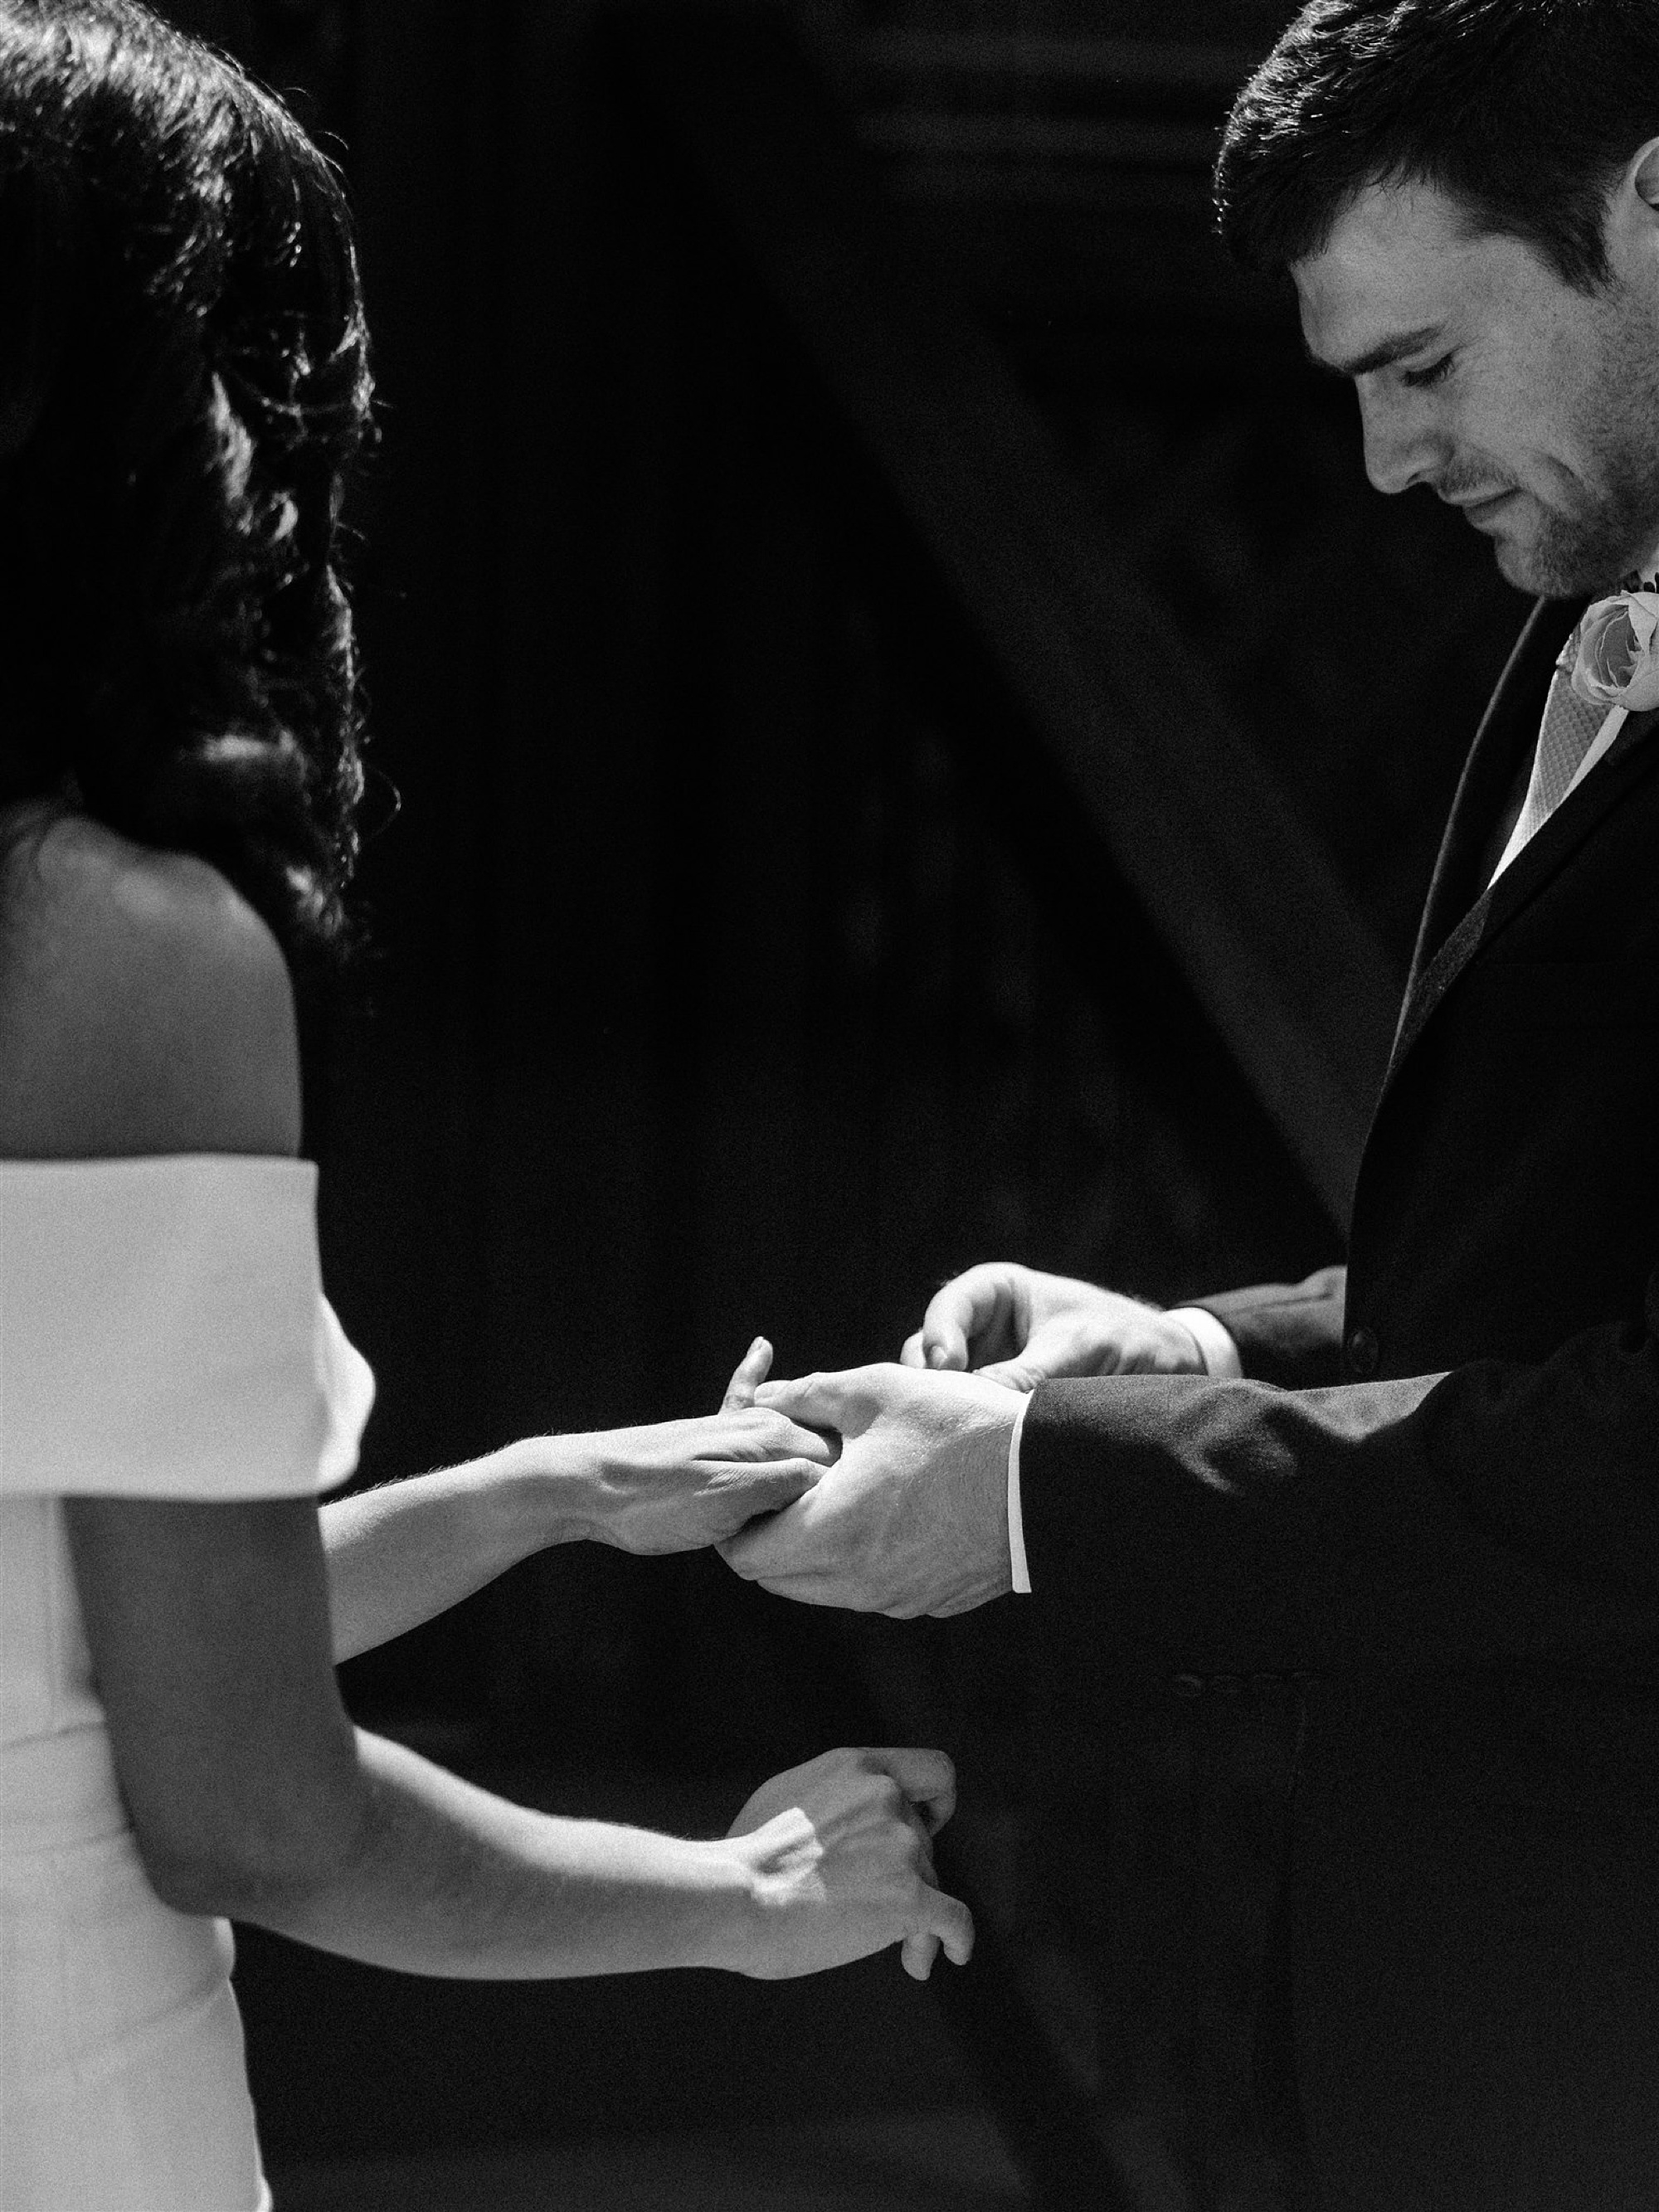 groom slides wedding ring on bride's finger during backyard wedding ceremony 